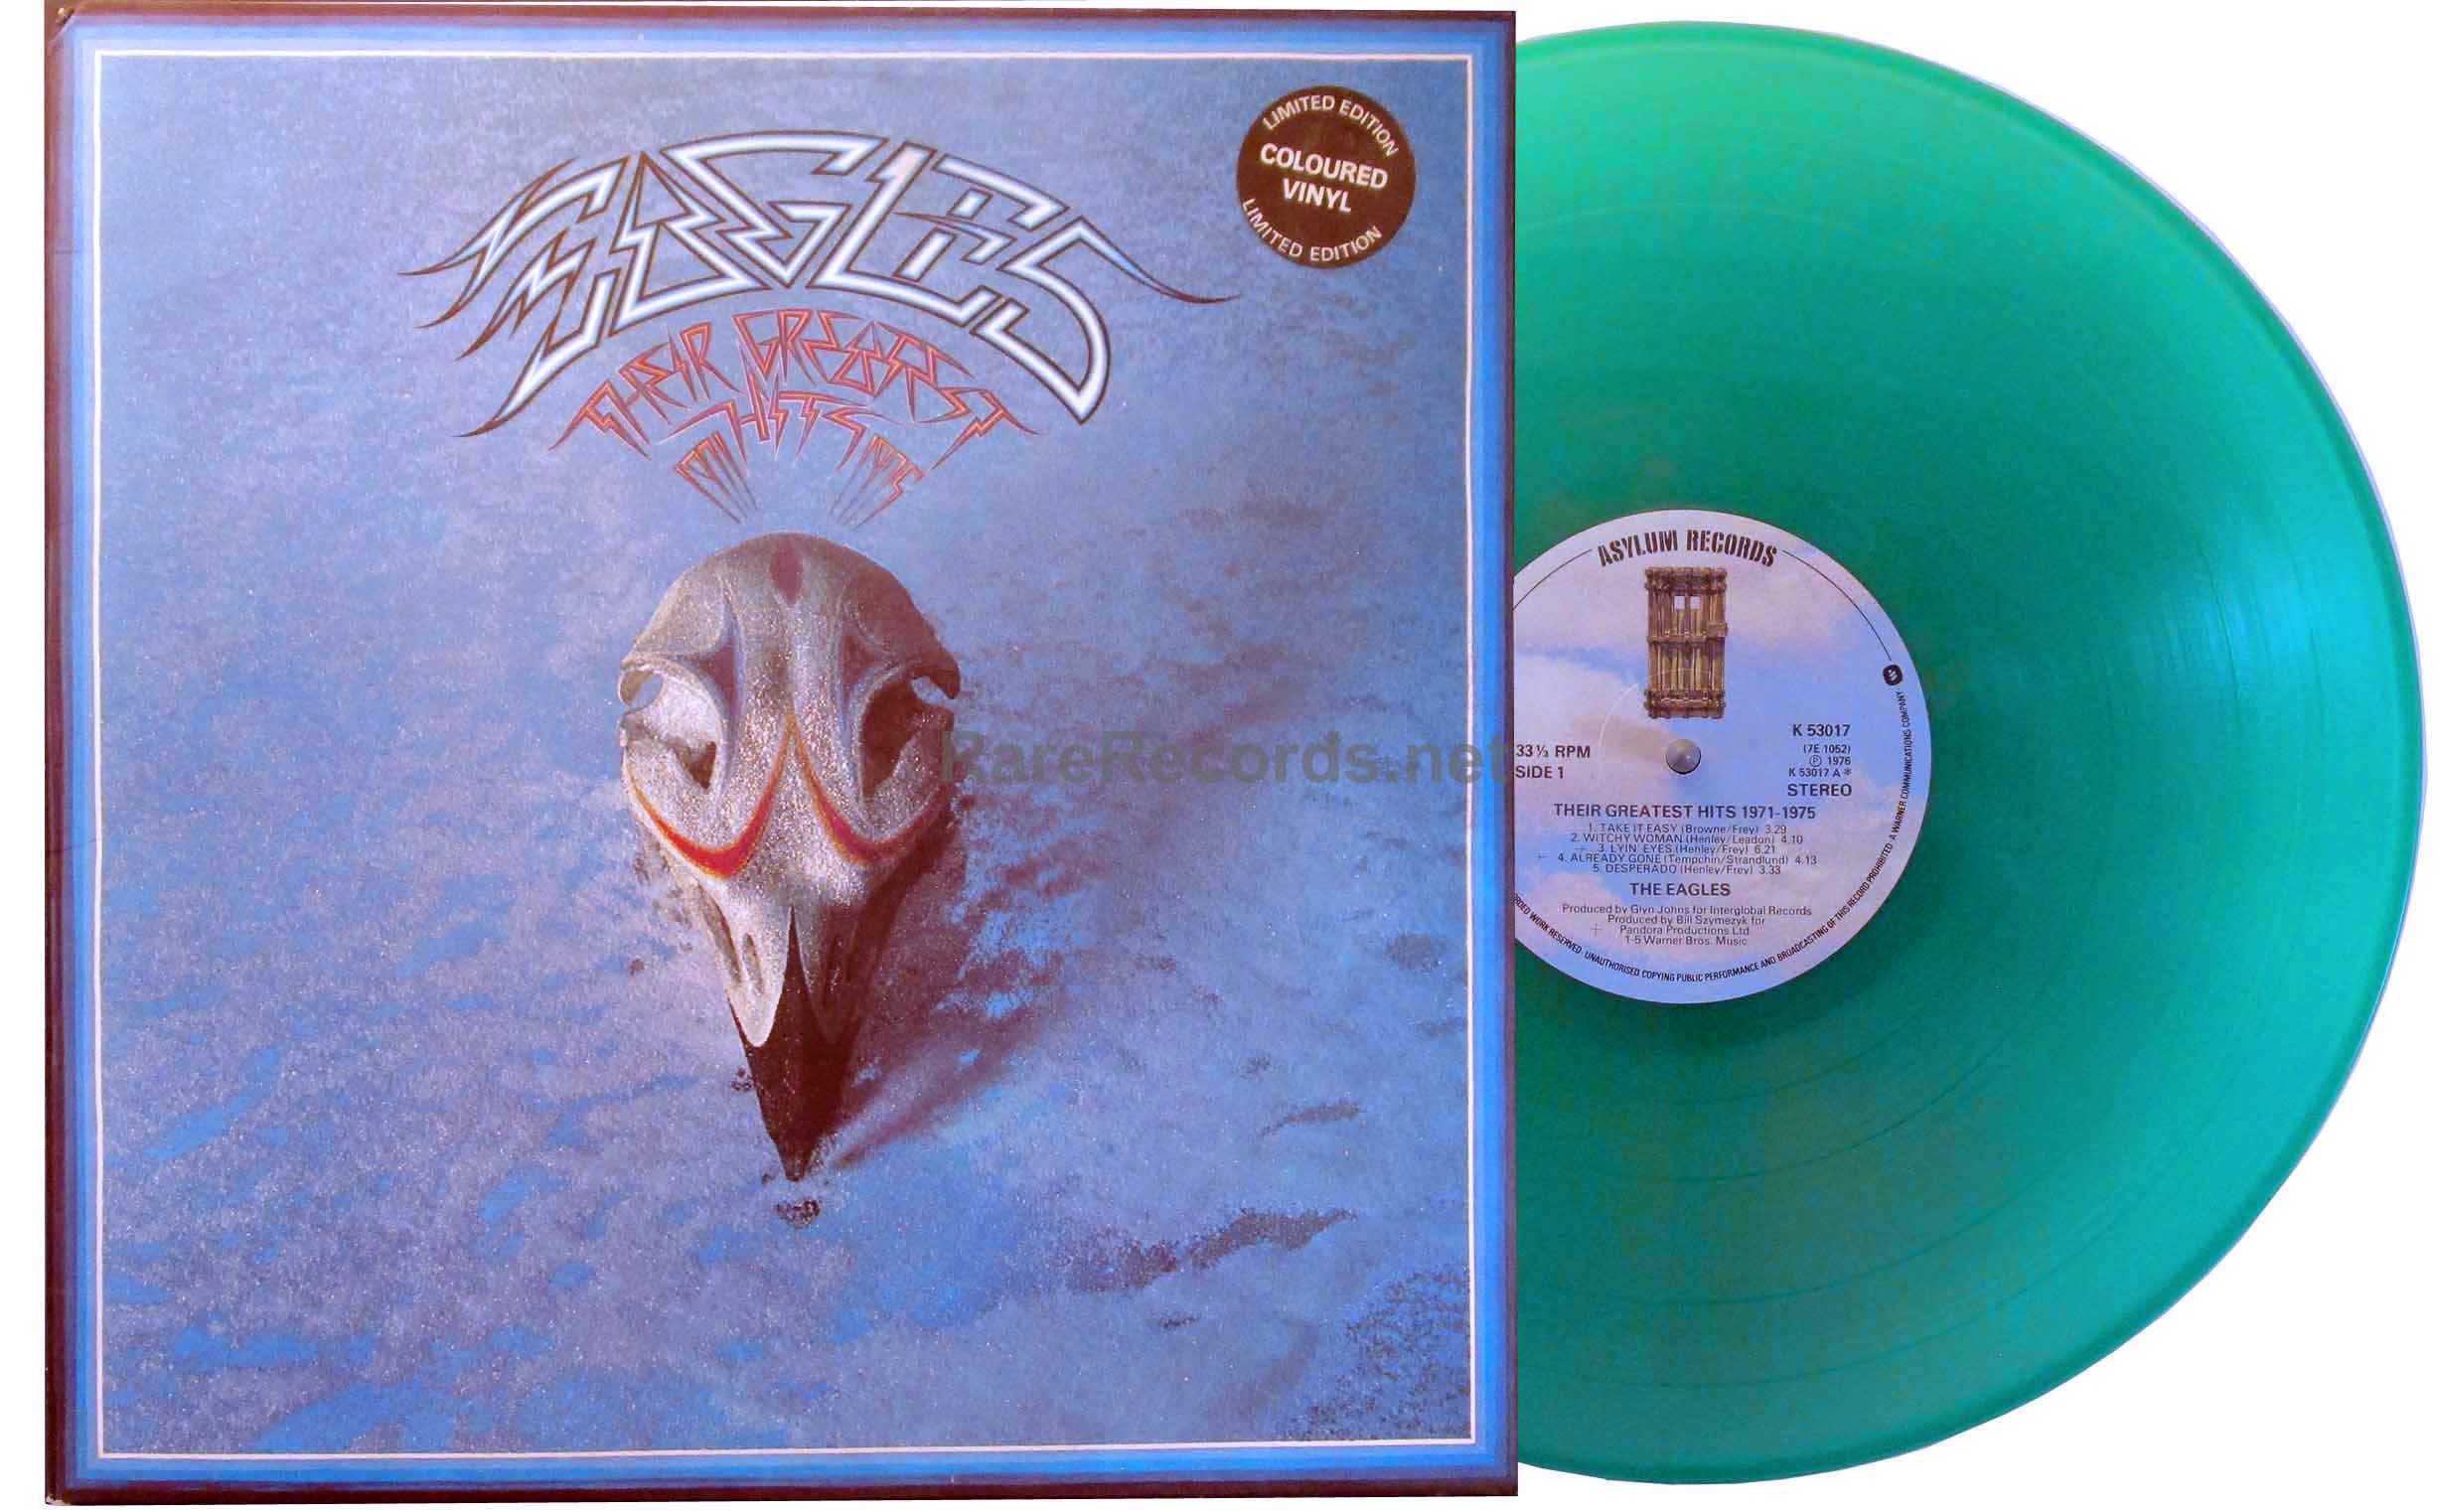 Eagles - Greatest Hits 1978 UK green vinyl LP